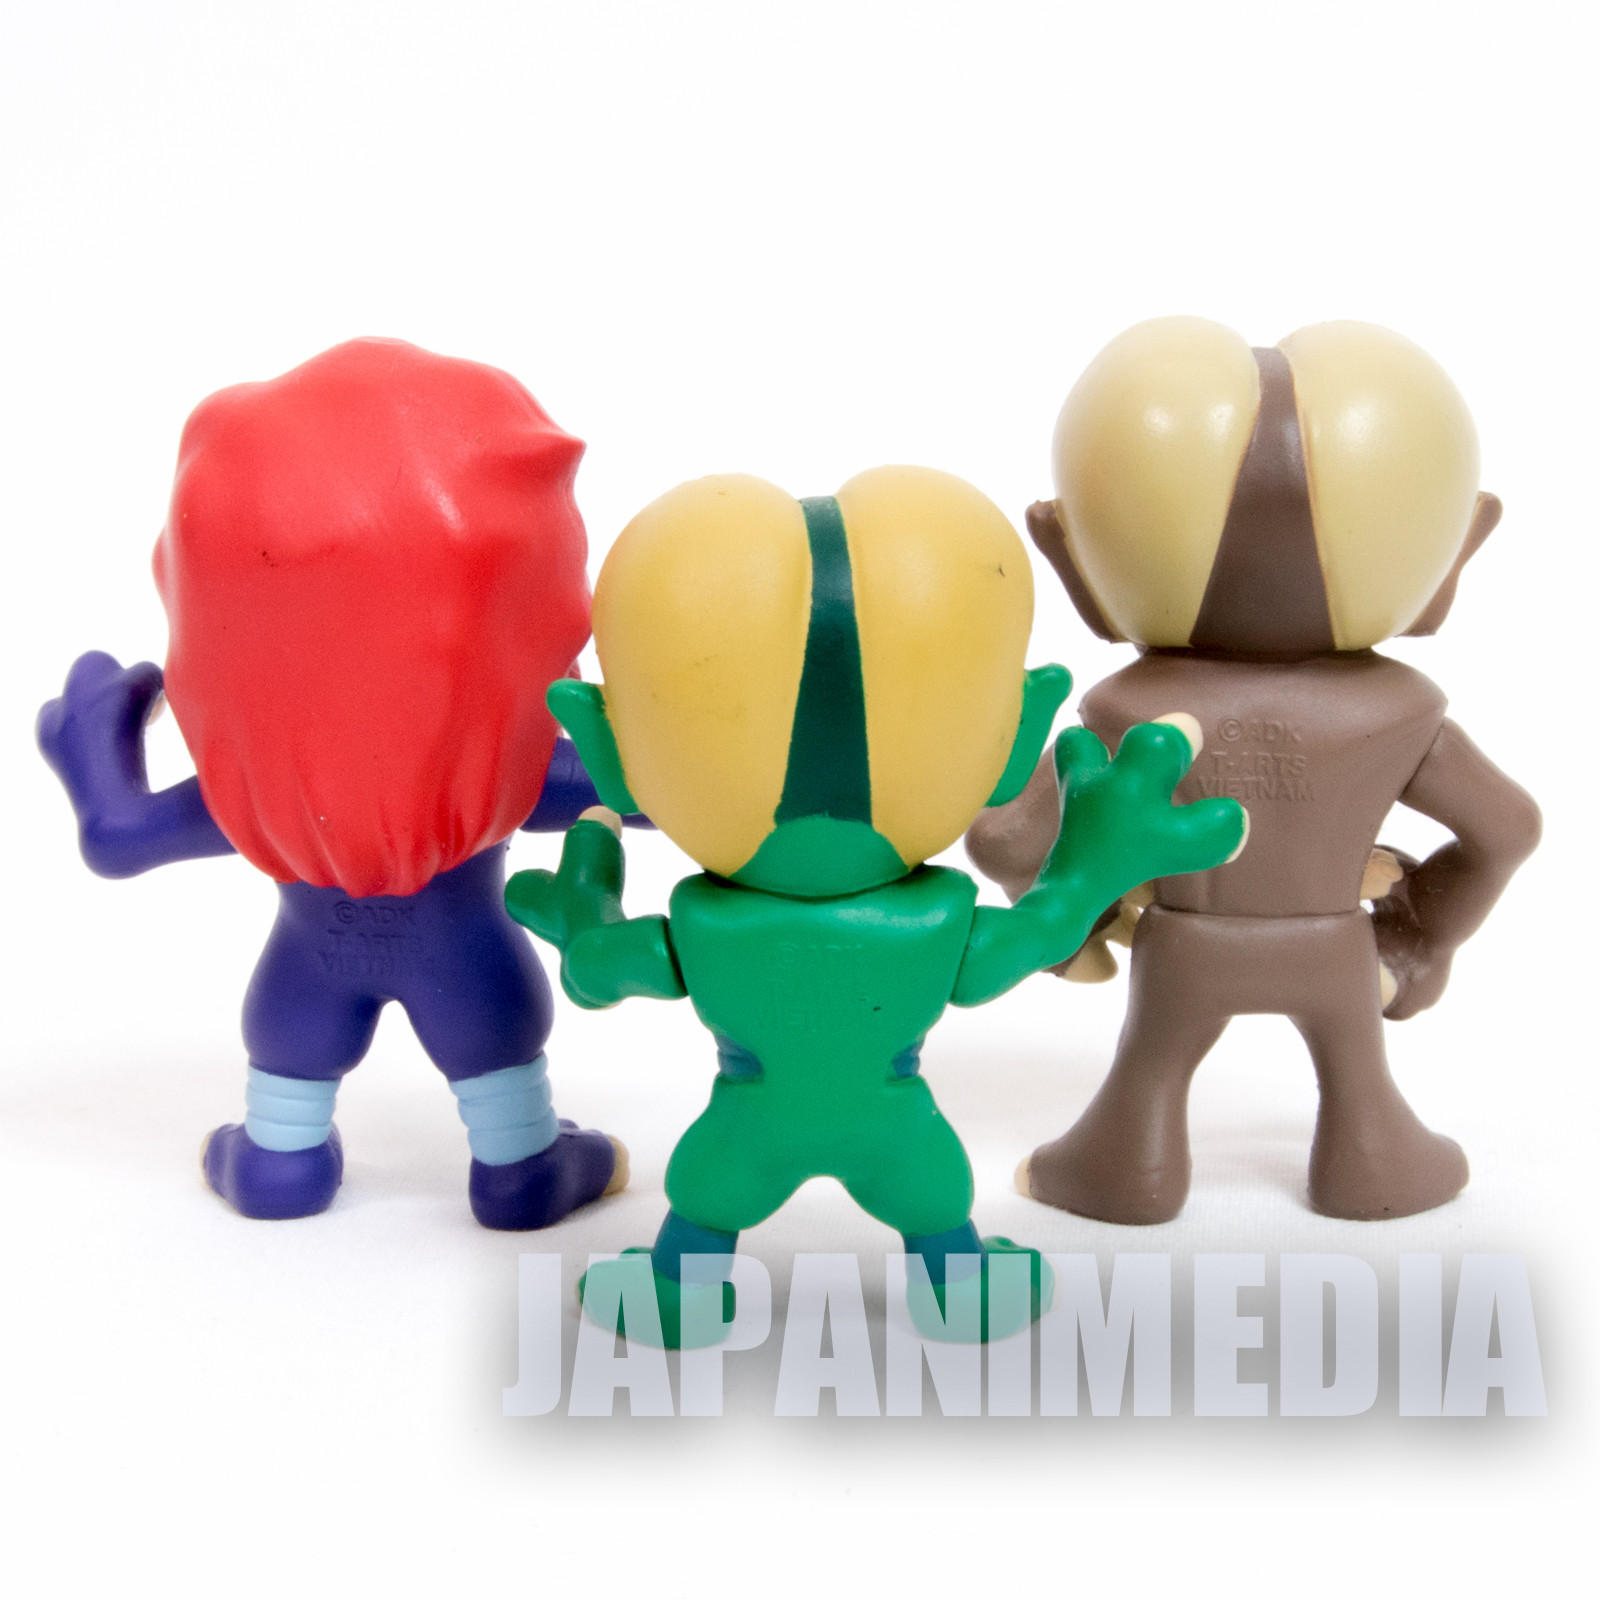 Humanoid Monster Bem Bella Belo Human Kubrick Set Figure Medicom Toy JAPAN  ANIME - Japanimedia Store